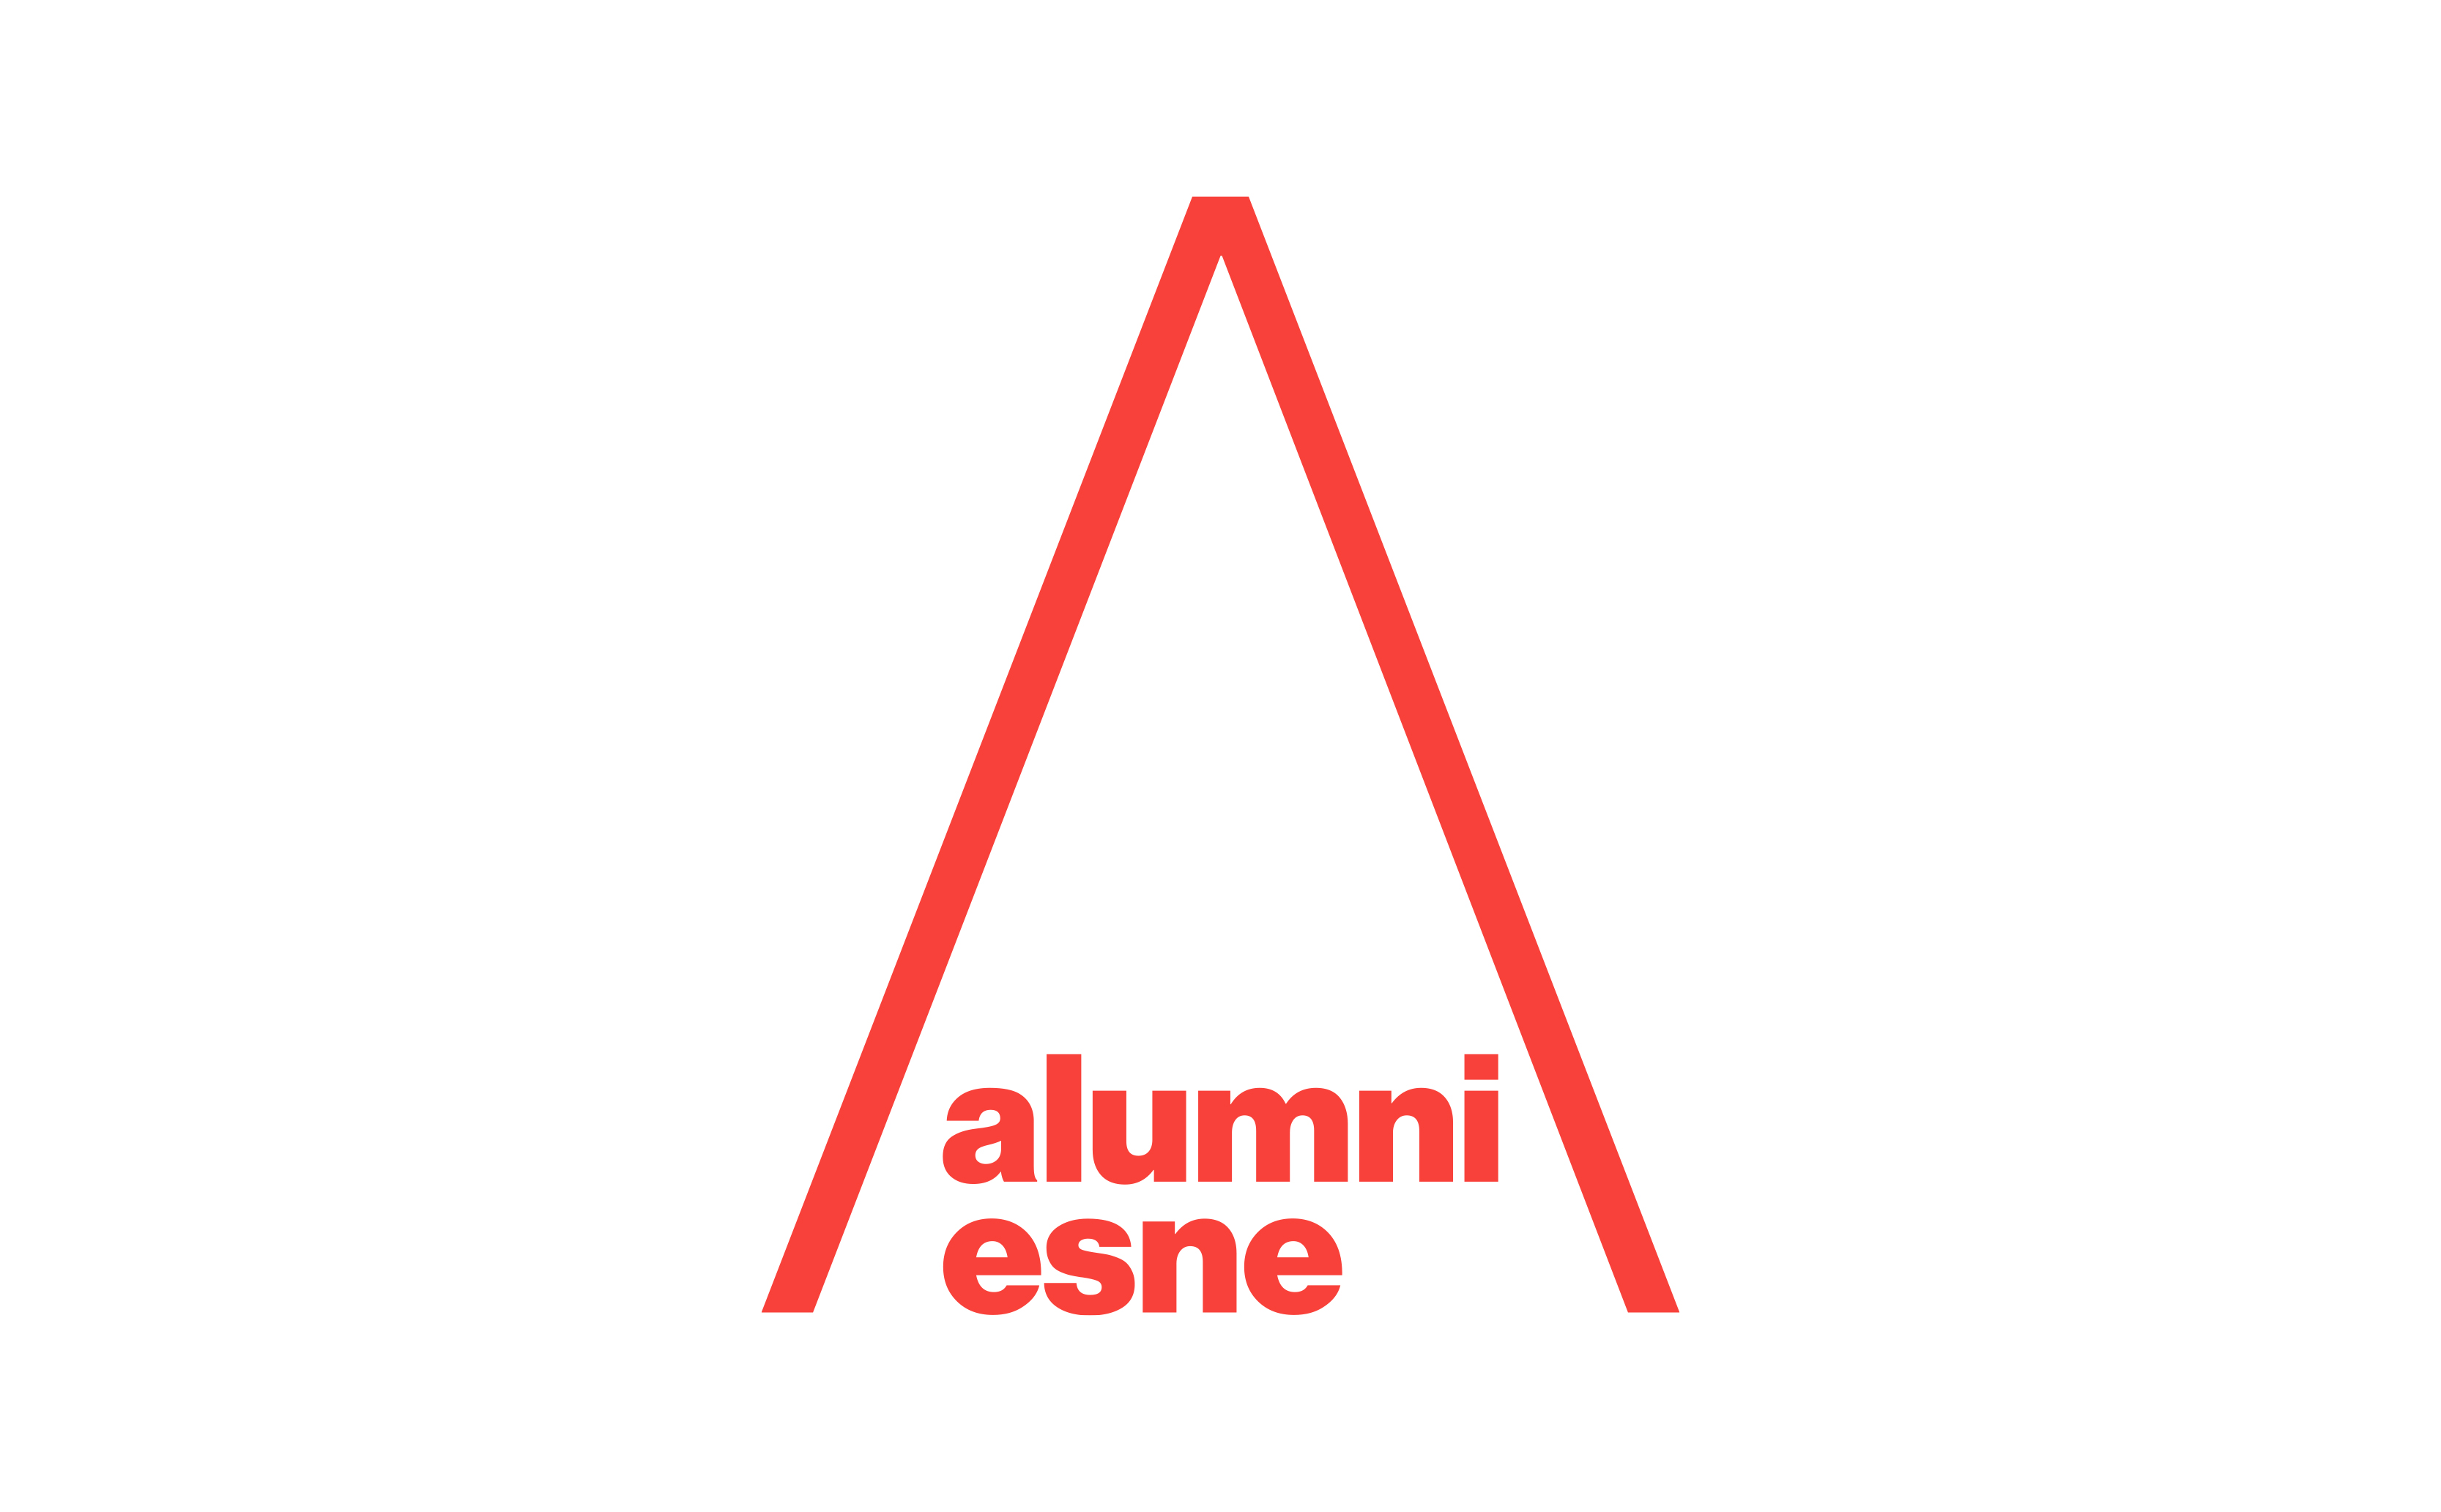 Alumni ESNE Identity by Laura Fernández - Creative Work